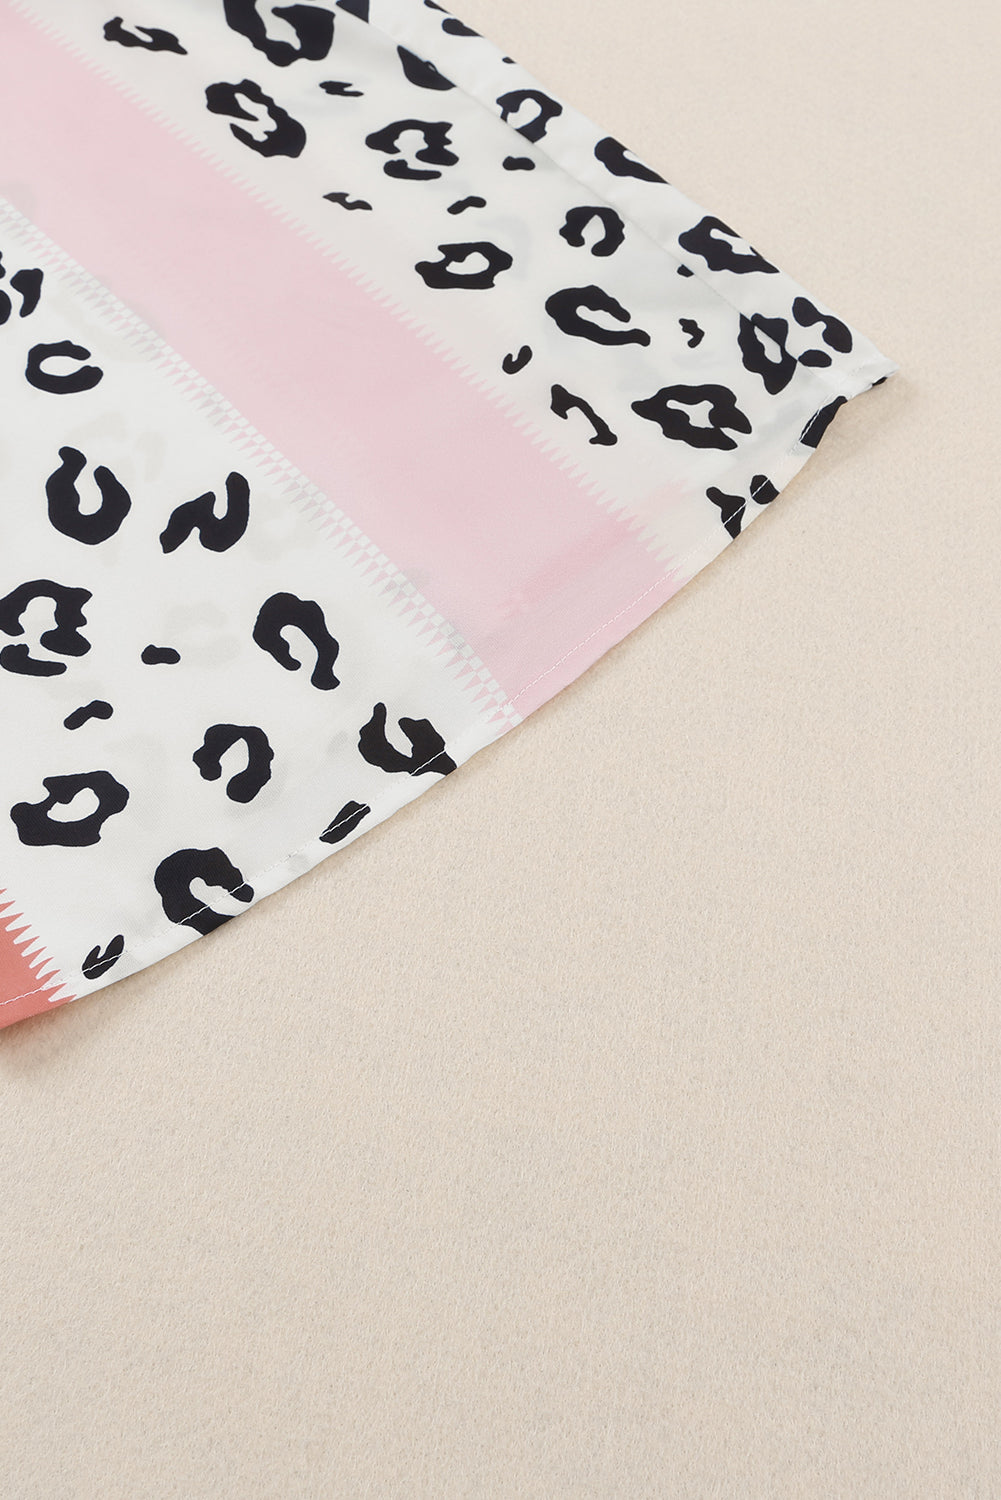 Pink Leopard Color Block Mix Print Pocketed Jumpsuit - Nicole Lee Apparel